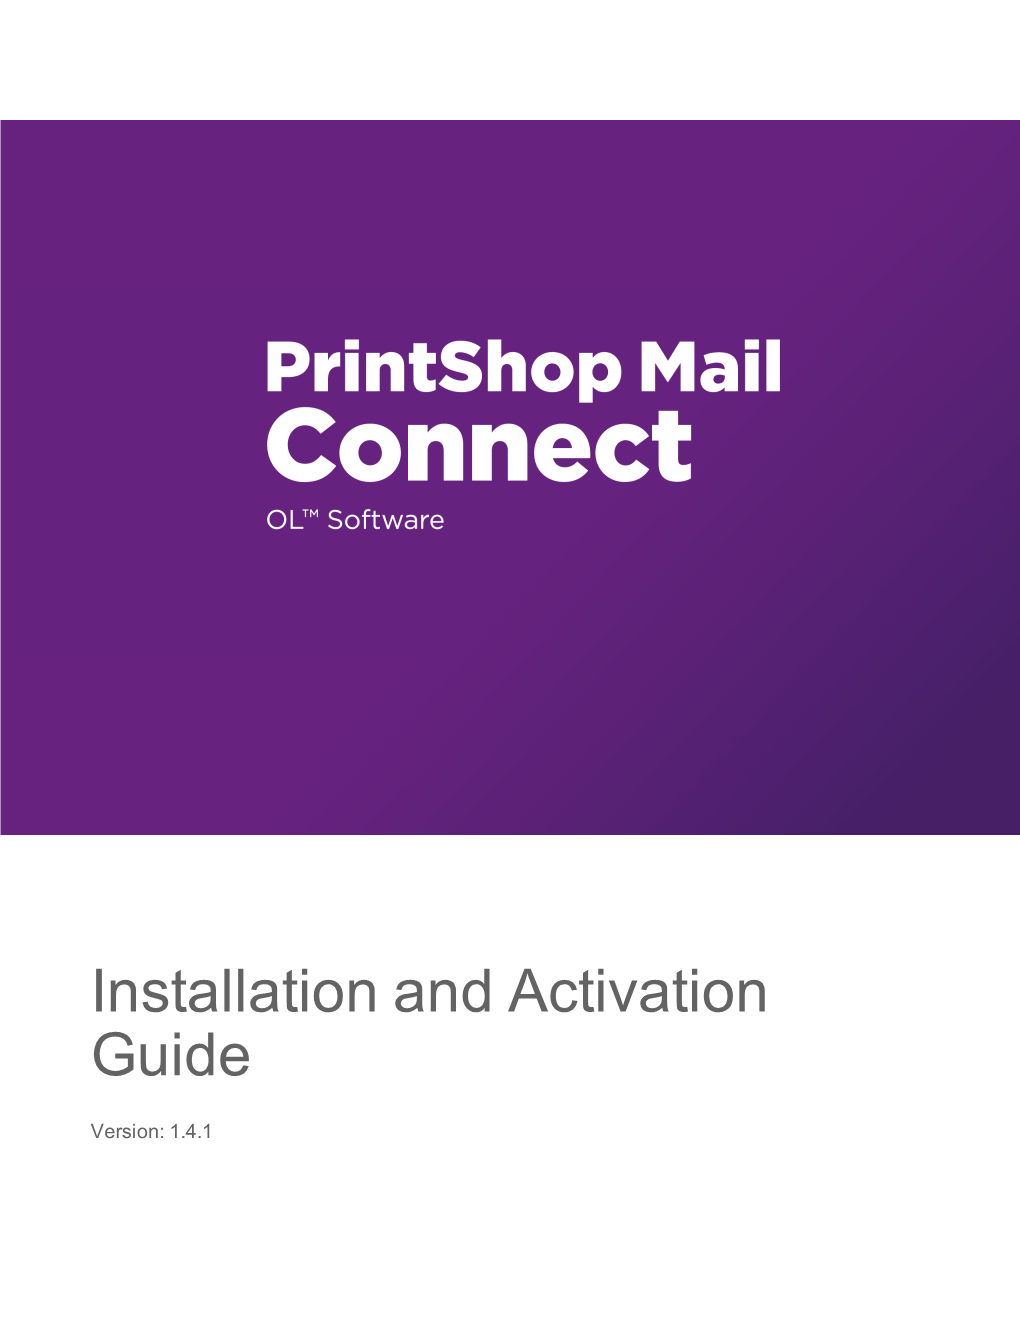 Printshop Mail Connect Installation and Activation